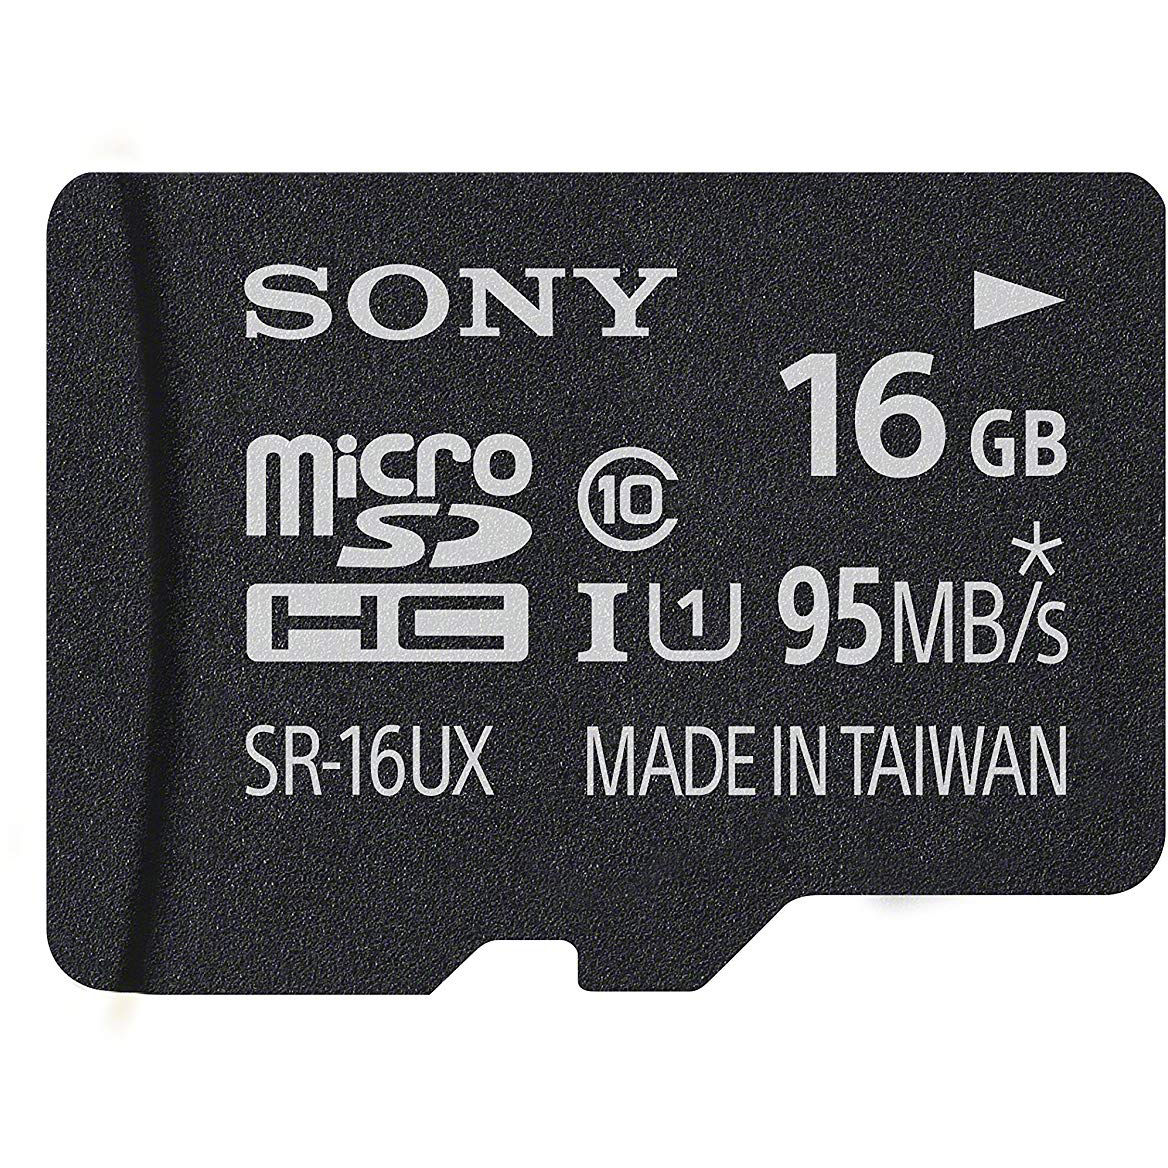 Original Sony Expert Class 10 16GB microSDHC Memory Card (SR16UXA)